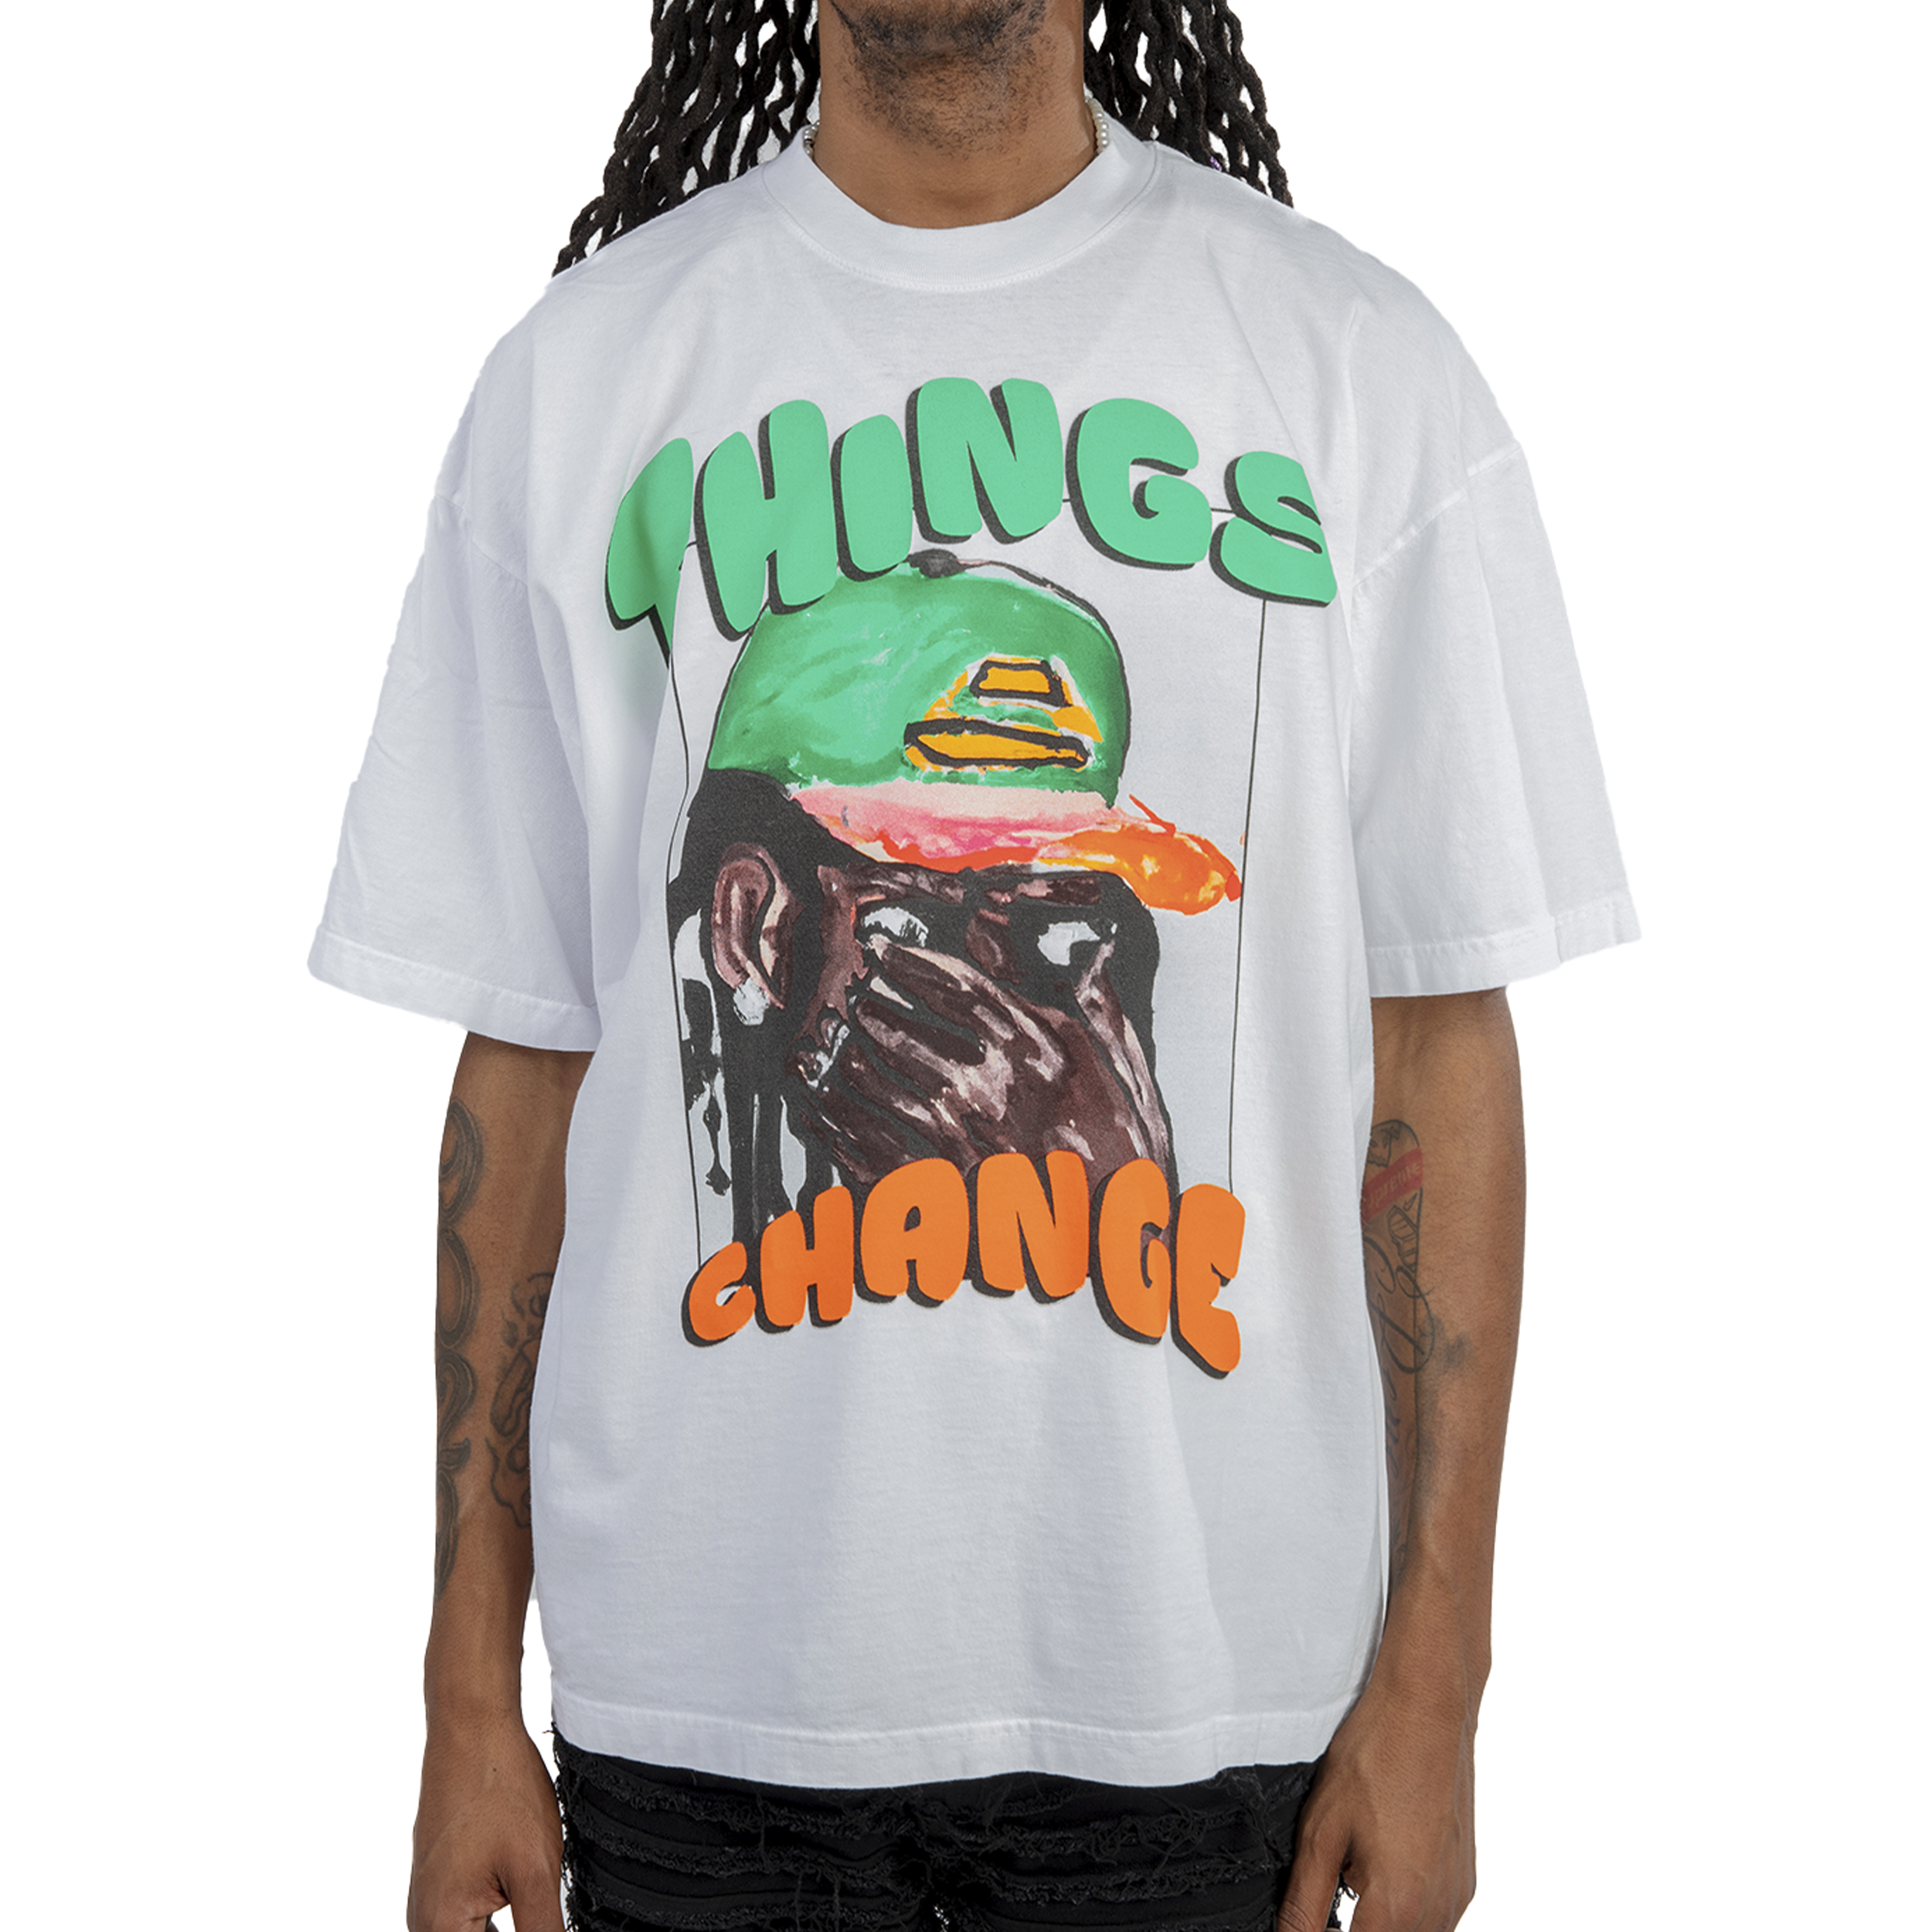 DKS "Things Change #1" T-Shirt